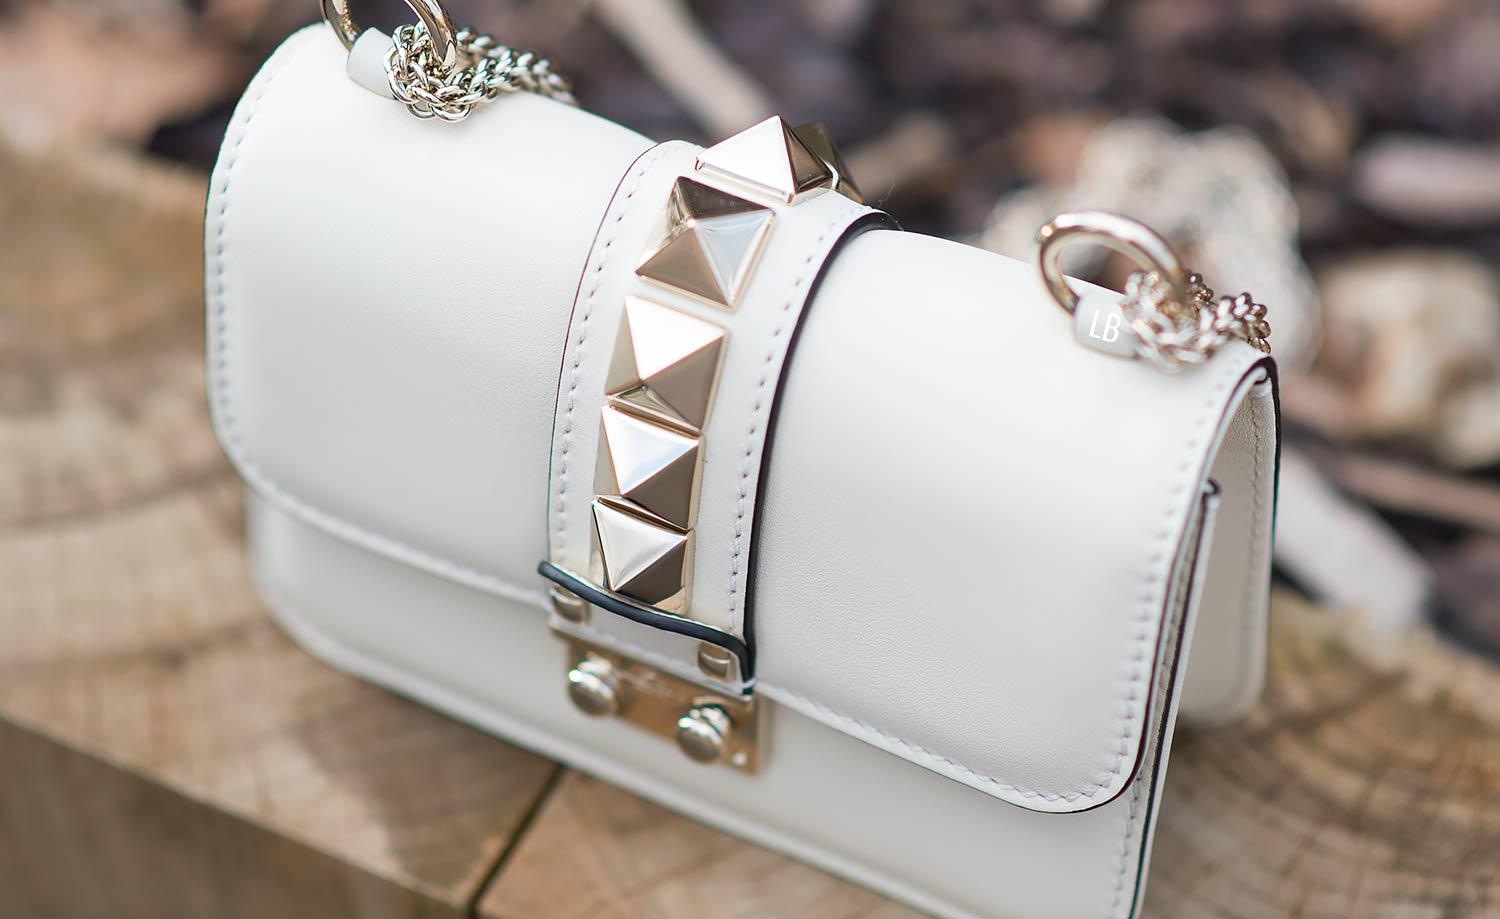 Valentino Mini Lock Bag in Light Ivory Review Raindrops of Sapphire